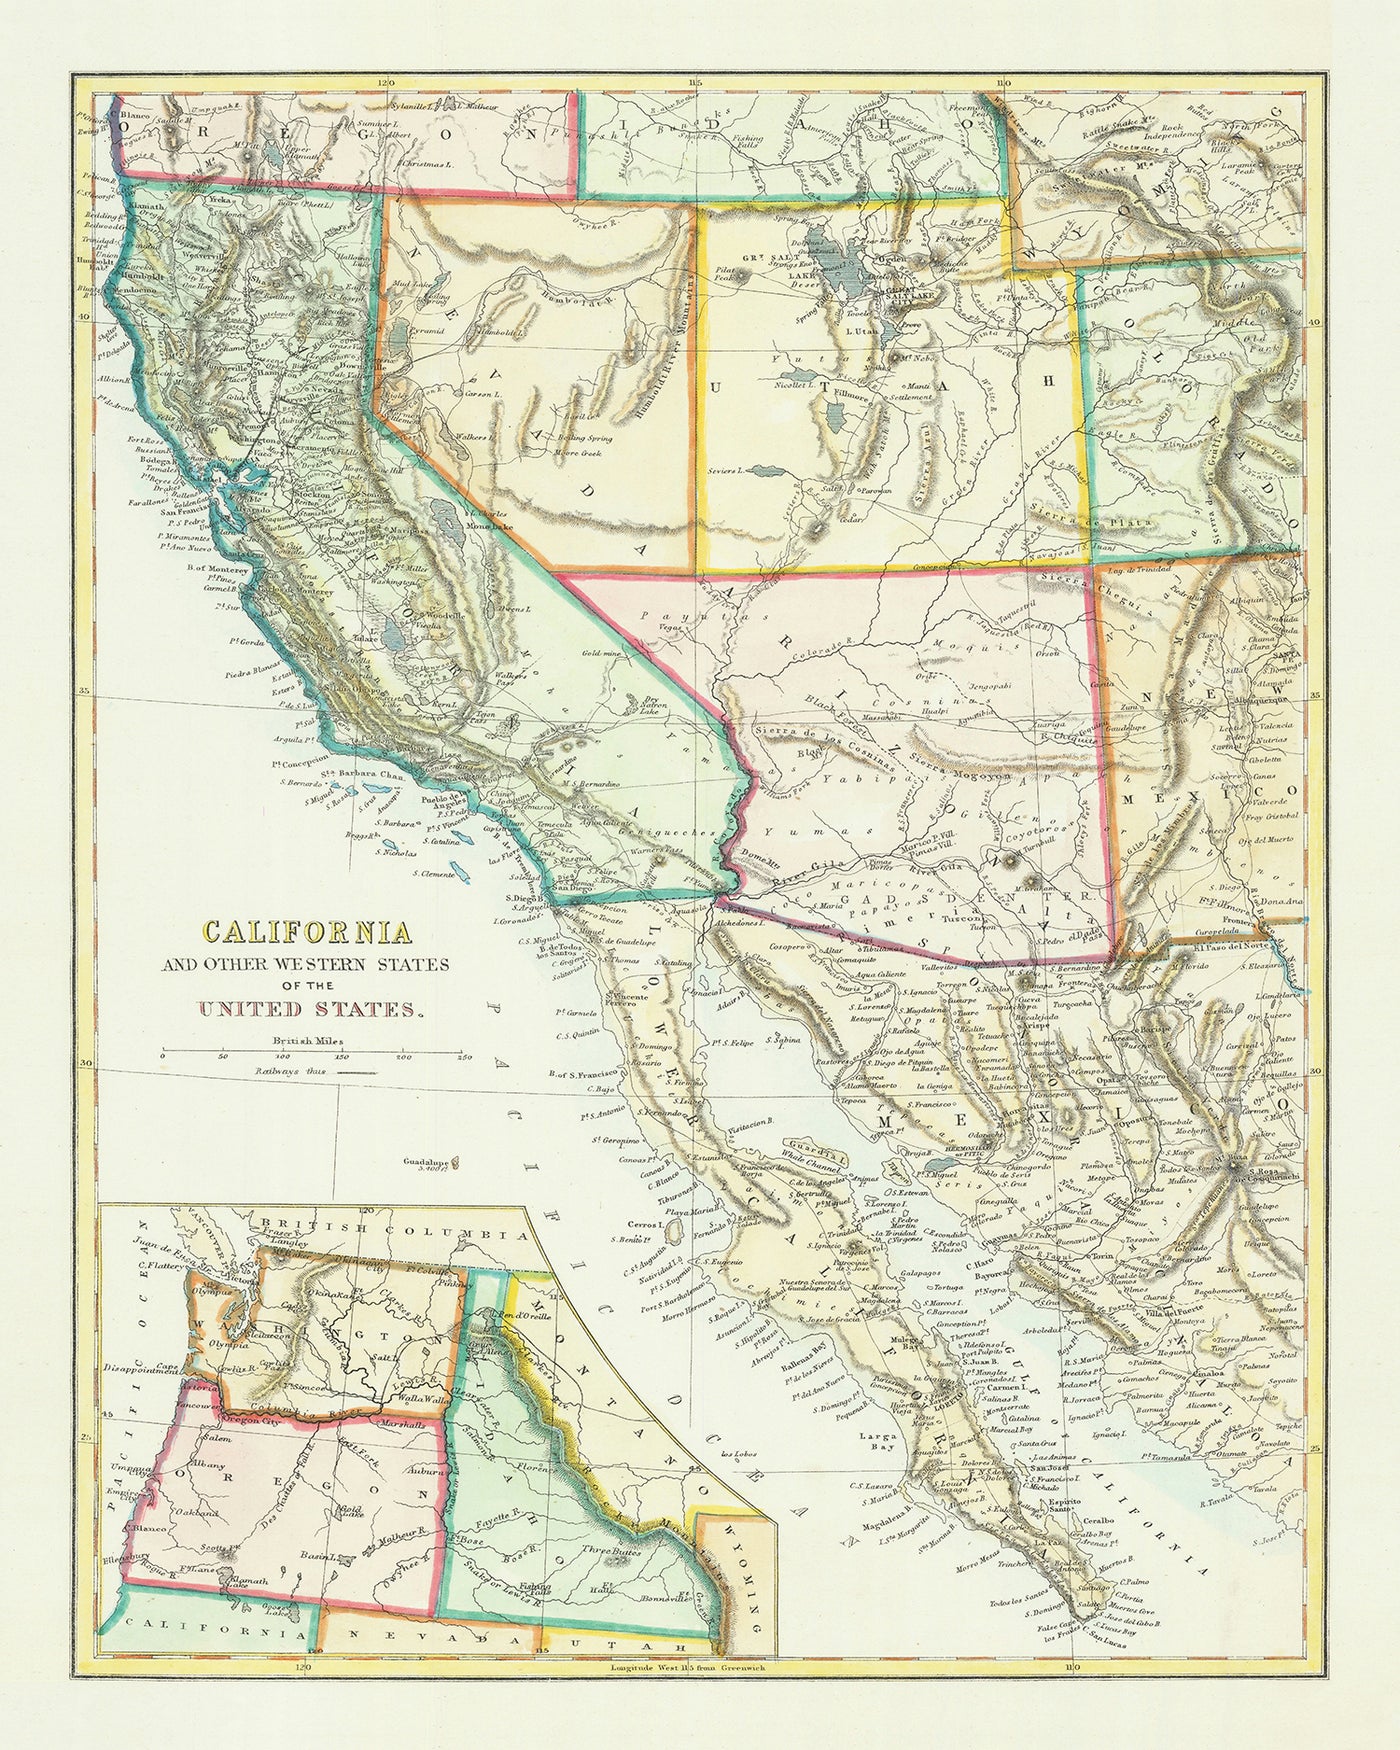 Ancienne carte de la Californie, de l'Arizona, du Nevada, de l'Utah, etc. en 1868 : San Francisco, Death Valley, Sierra Nevada, fleuve Colorado, mormons de l'Utah